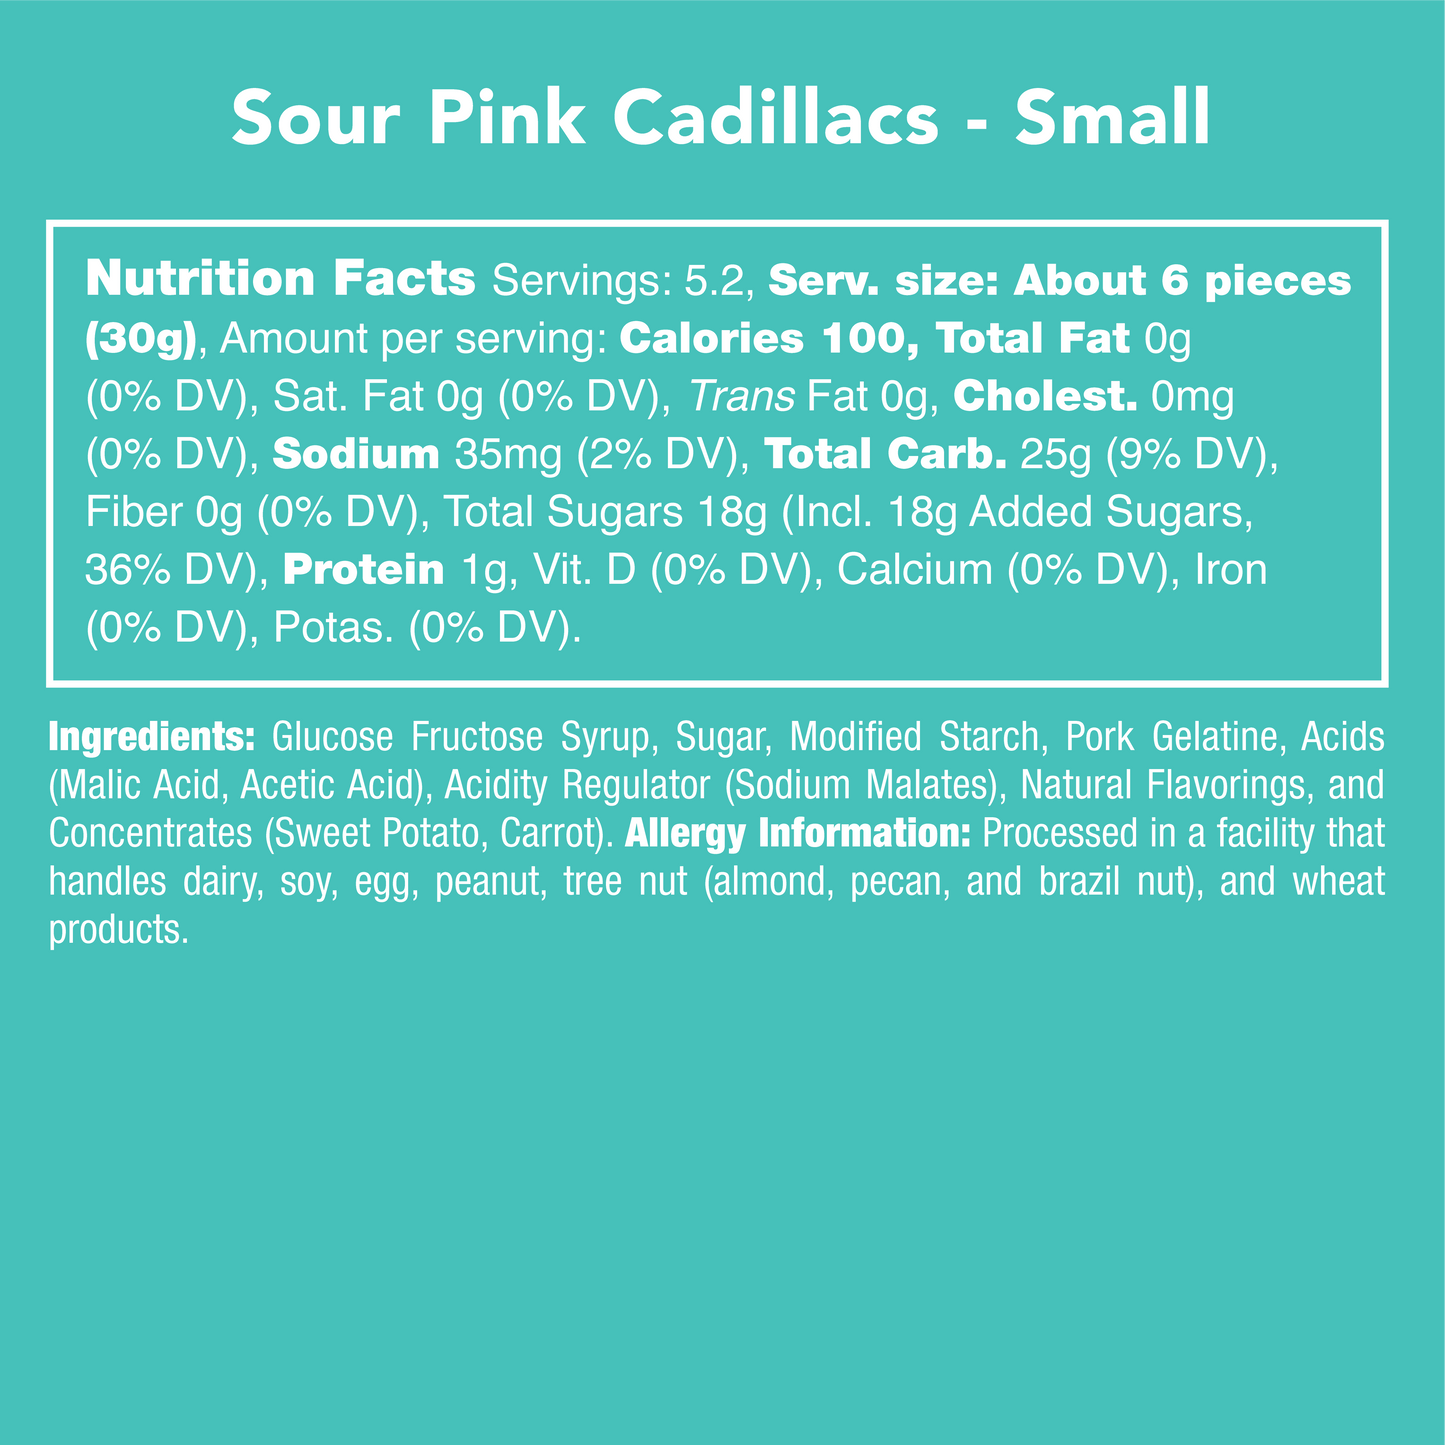 Sour Pink Cadillacs